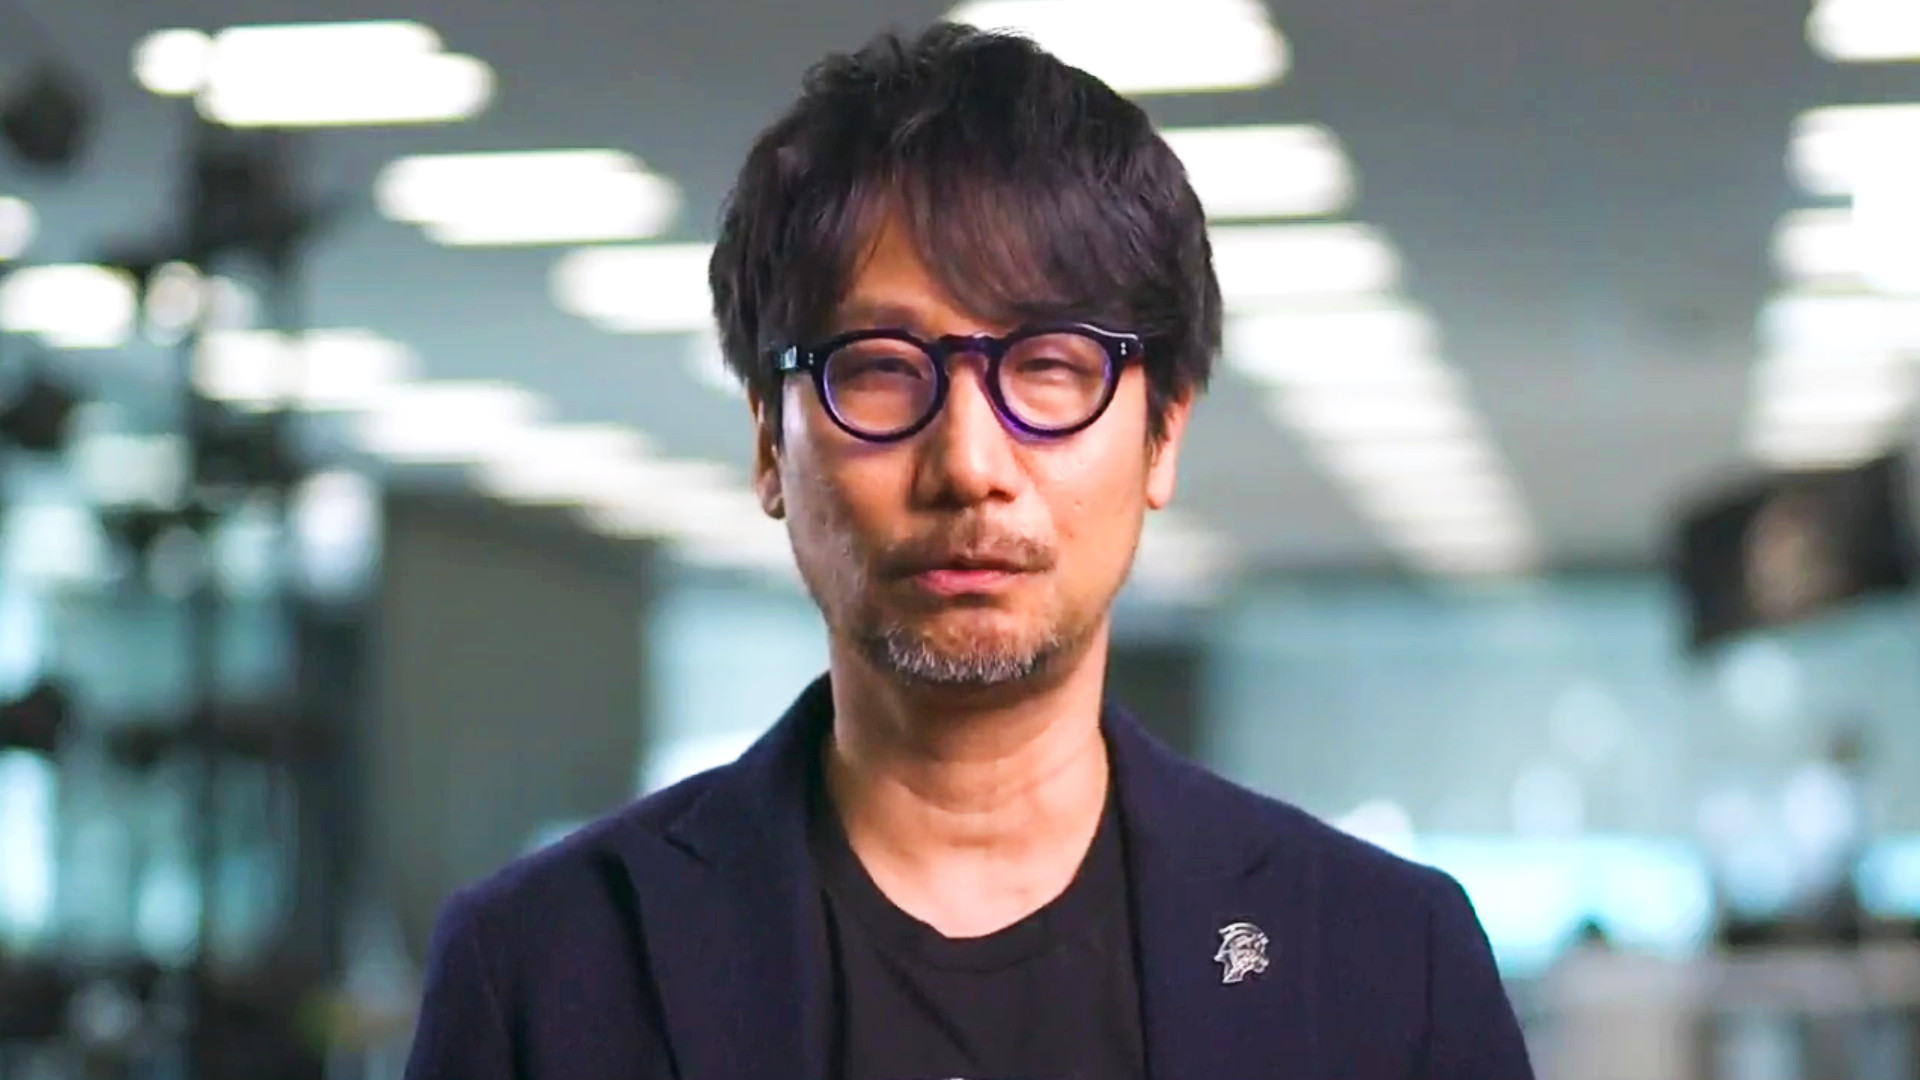 Hideo Kojima working on a new game with Microsoft